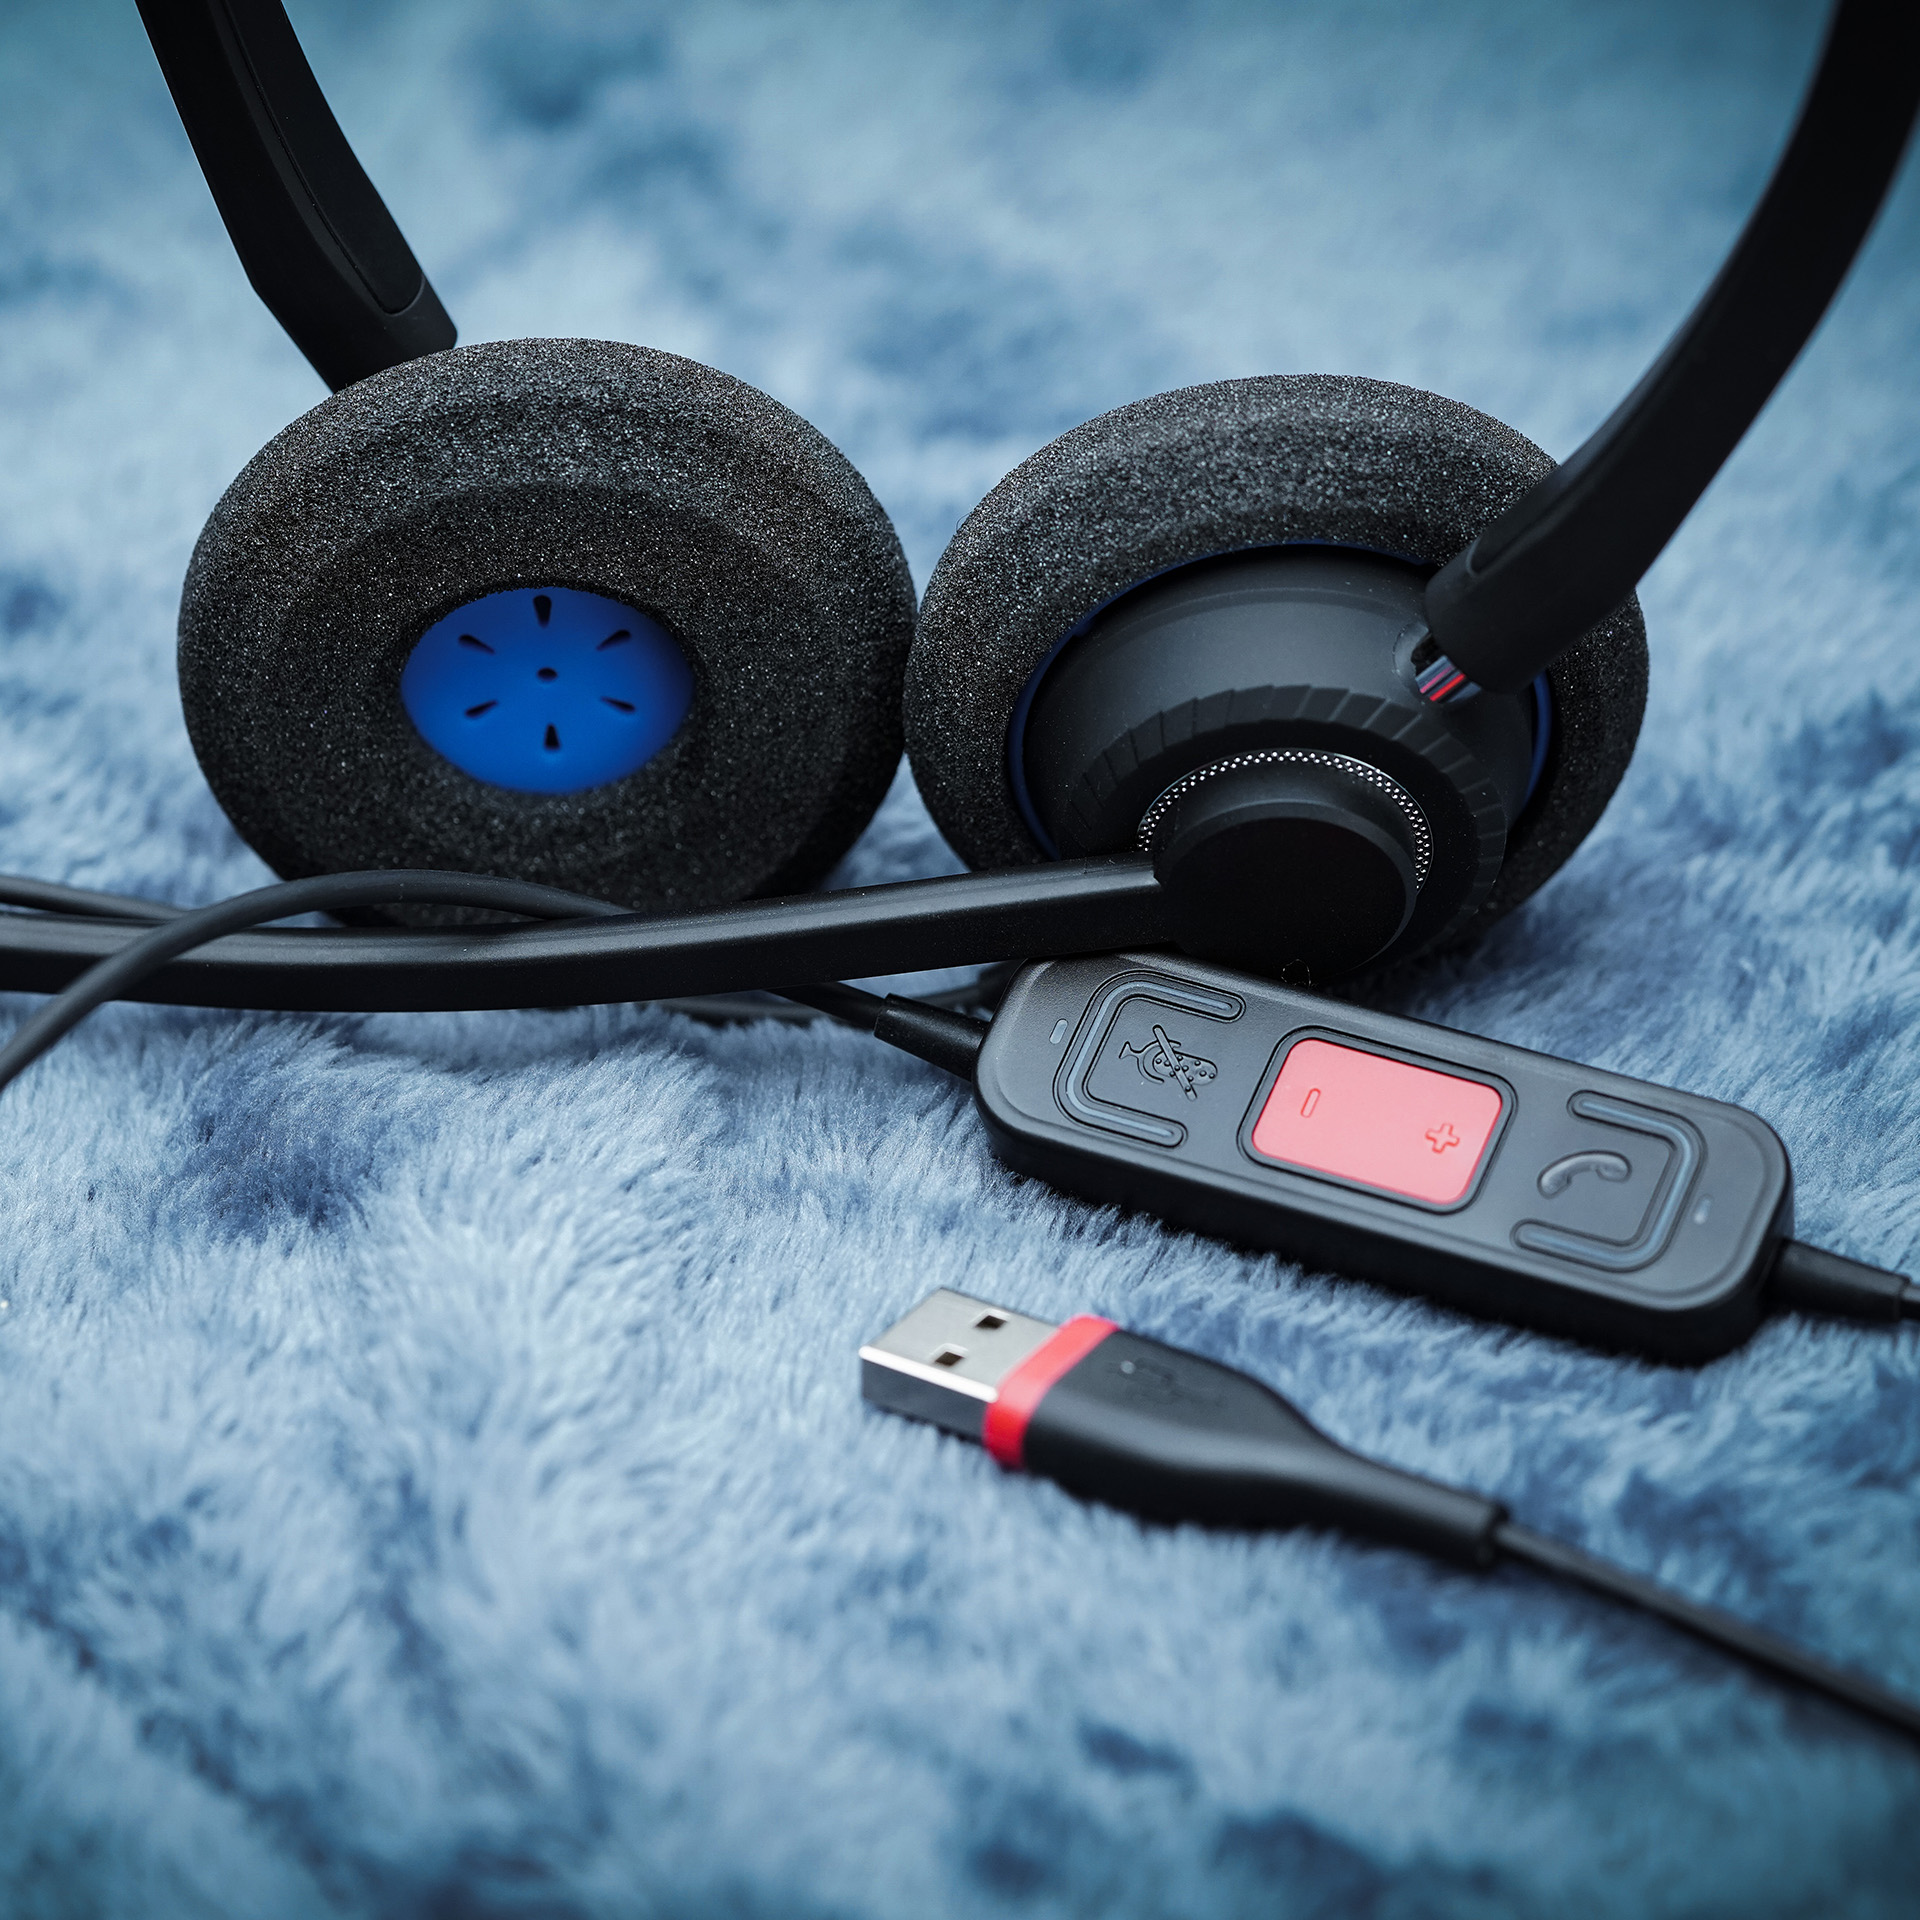 High-qualitynotion Speakers With Voice Optimization Noise-cancelling Microphone USB Interface AH 21 U Premium USB Headset